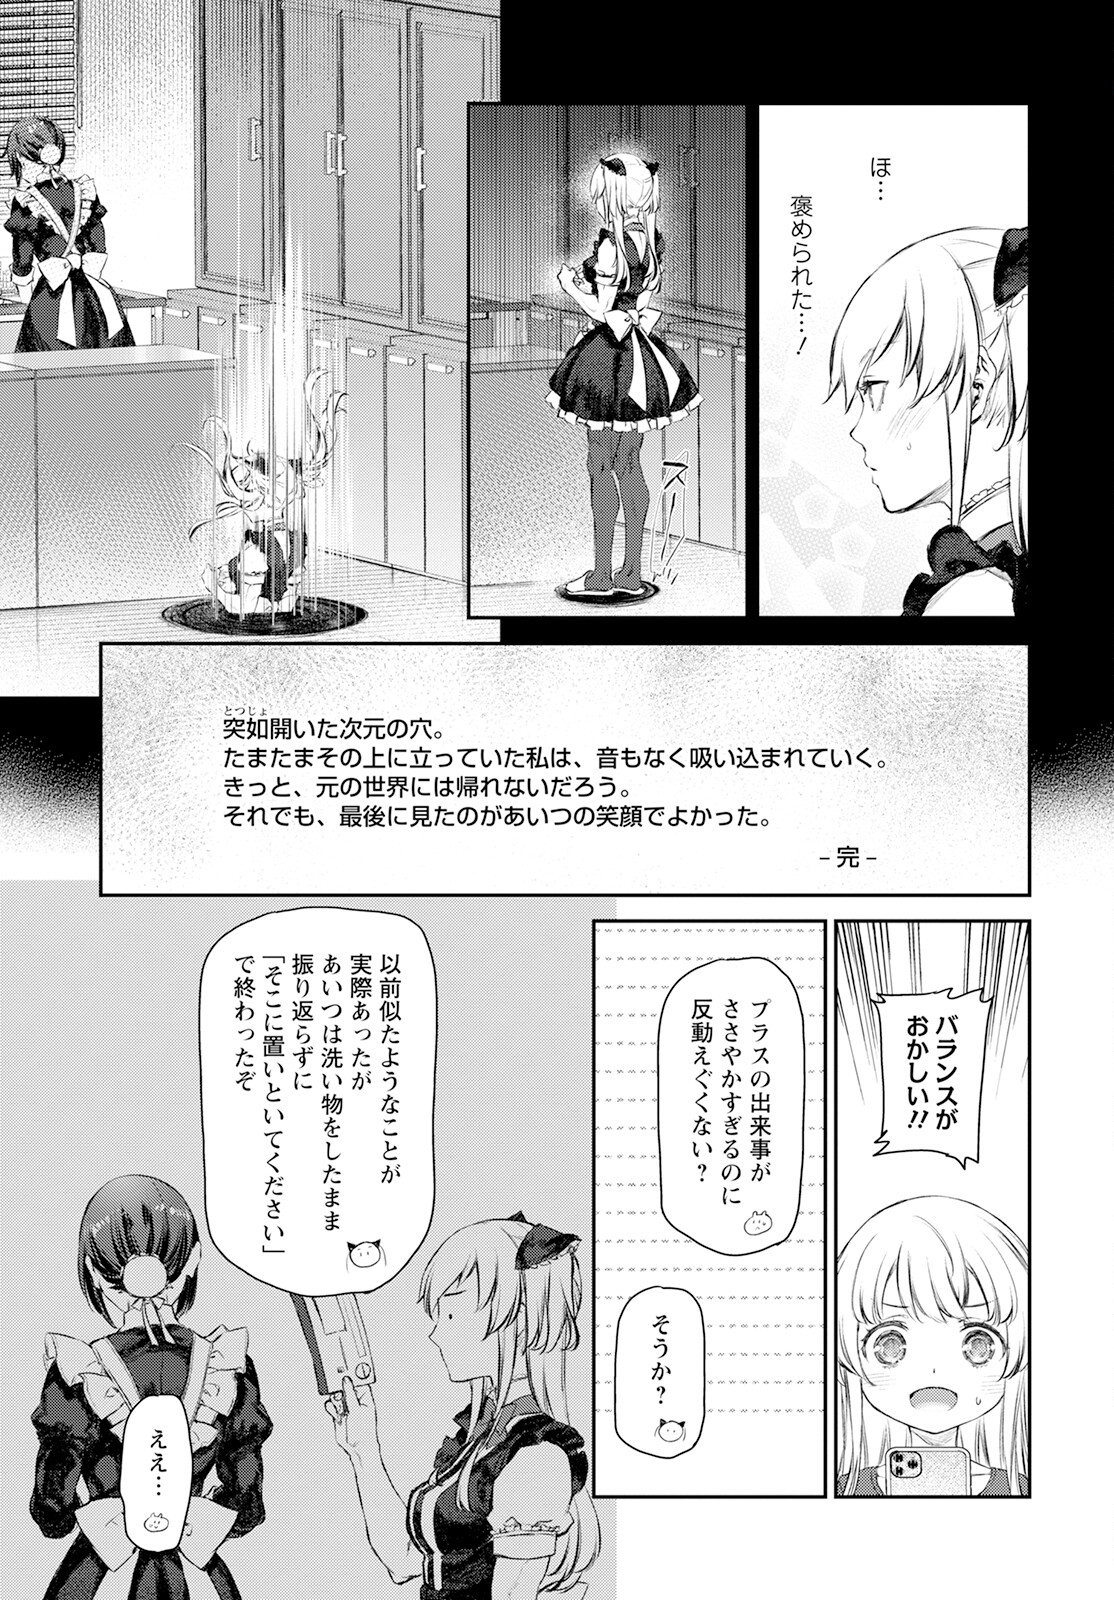 Uchi no Maid ga Uzasugiru! - Chapter 56 - Page 13